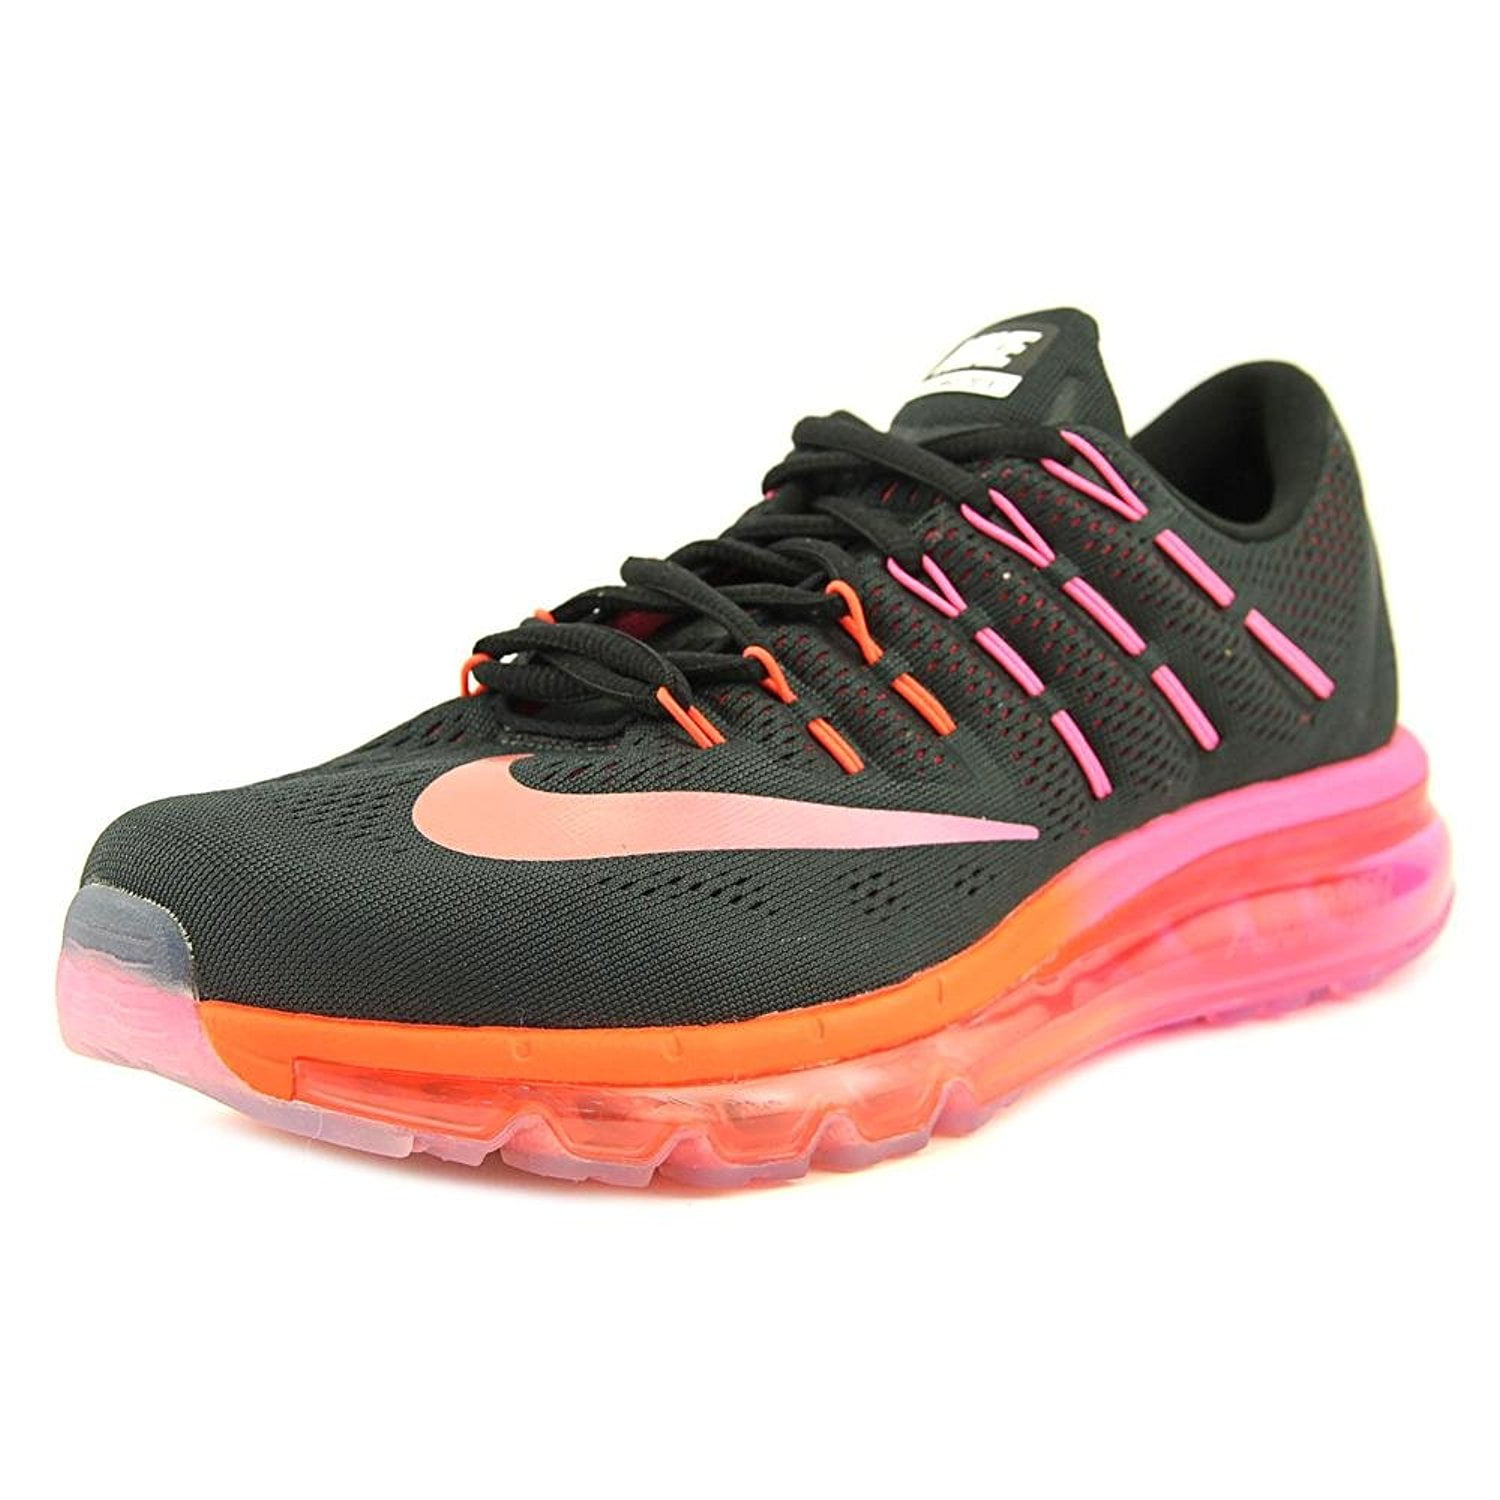 Nike Nike Womens Air Max 2016 Running Shoes Black Multi Color